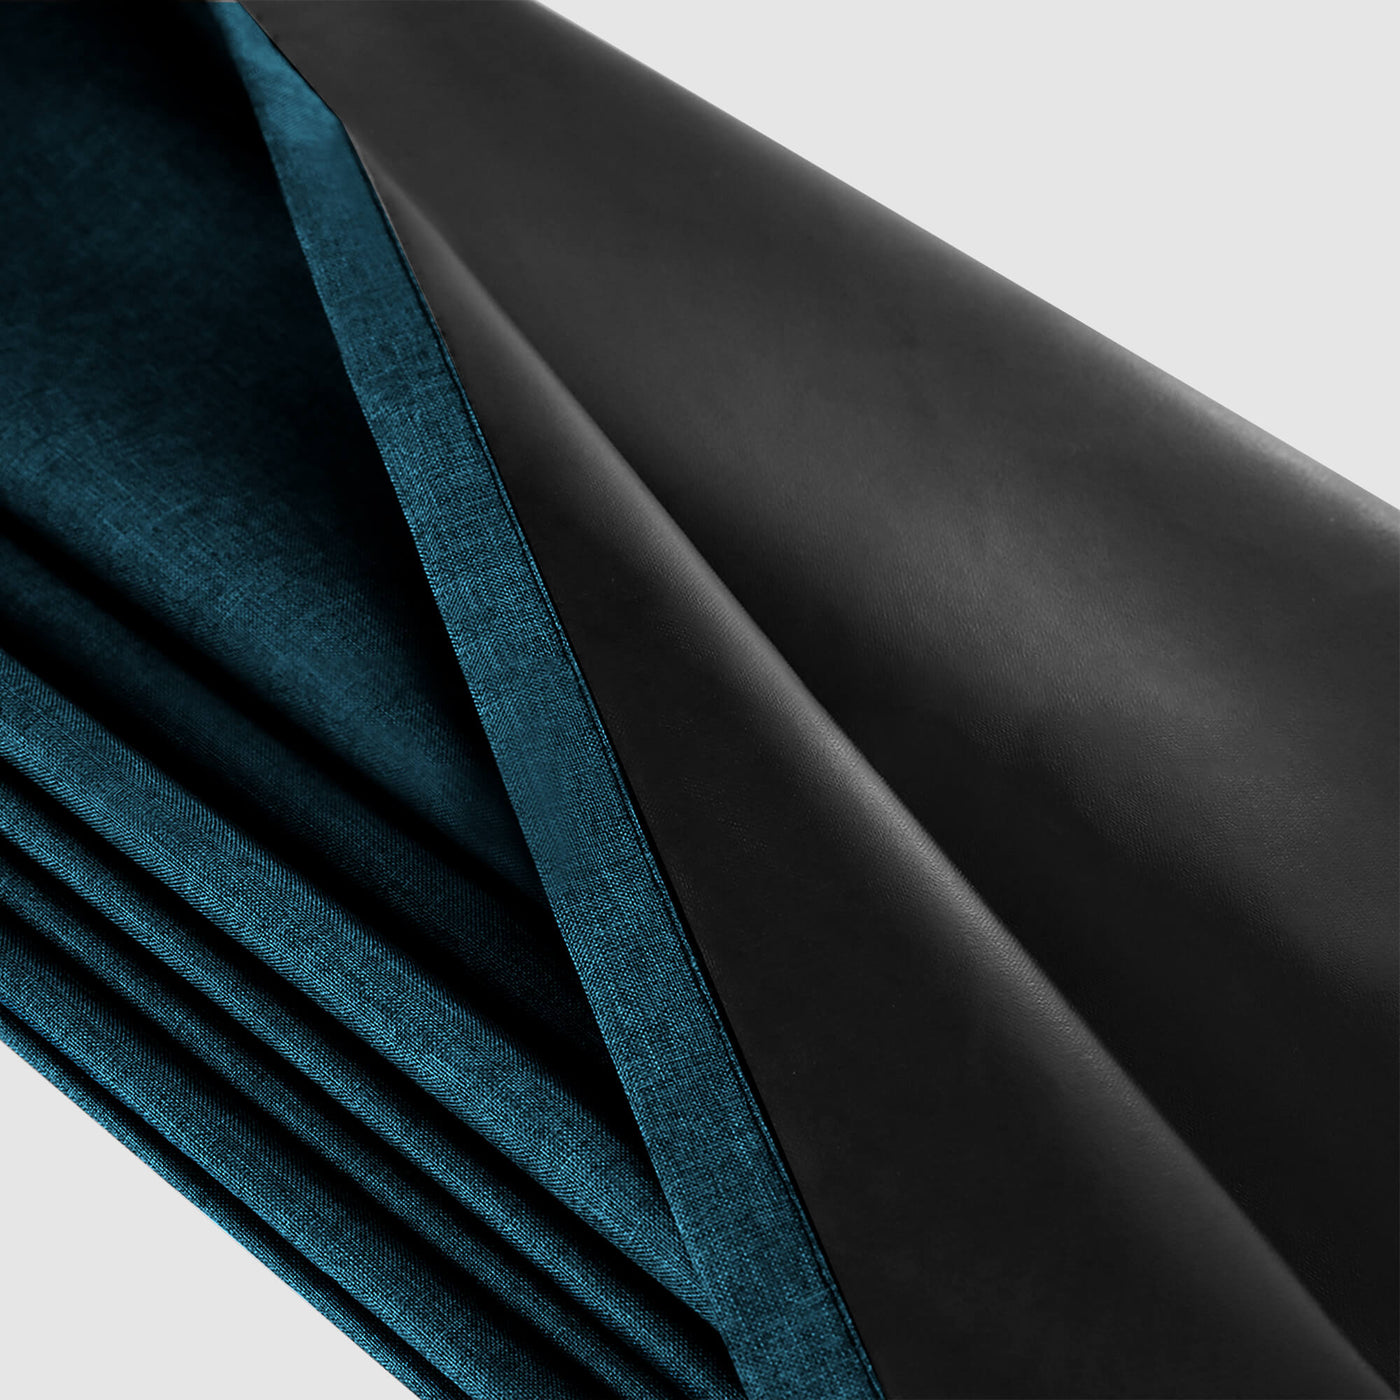 Heartcosy Blackout Curtains Dark Blue - Grommet Top & Bottom